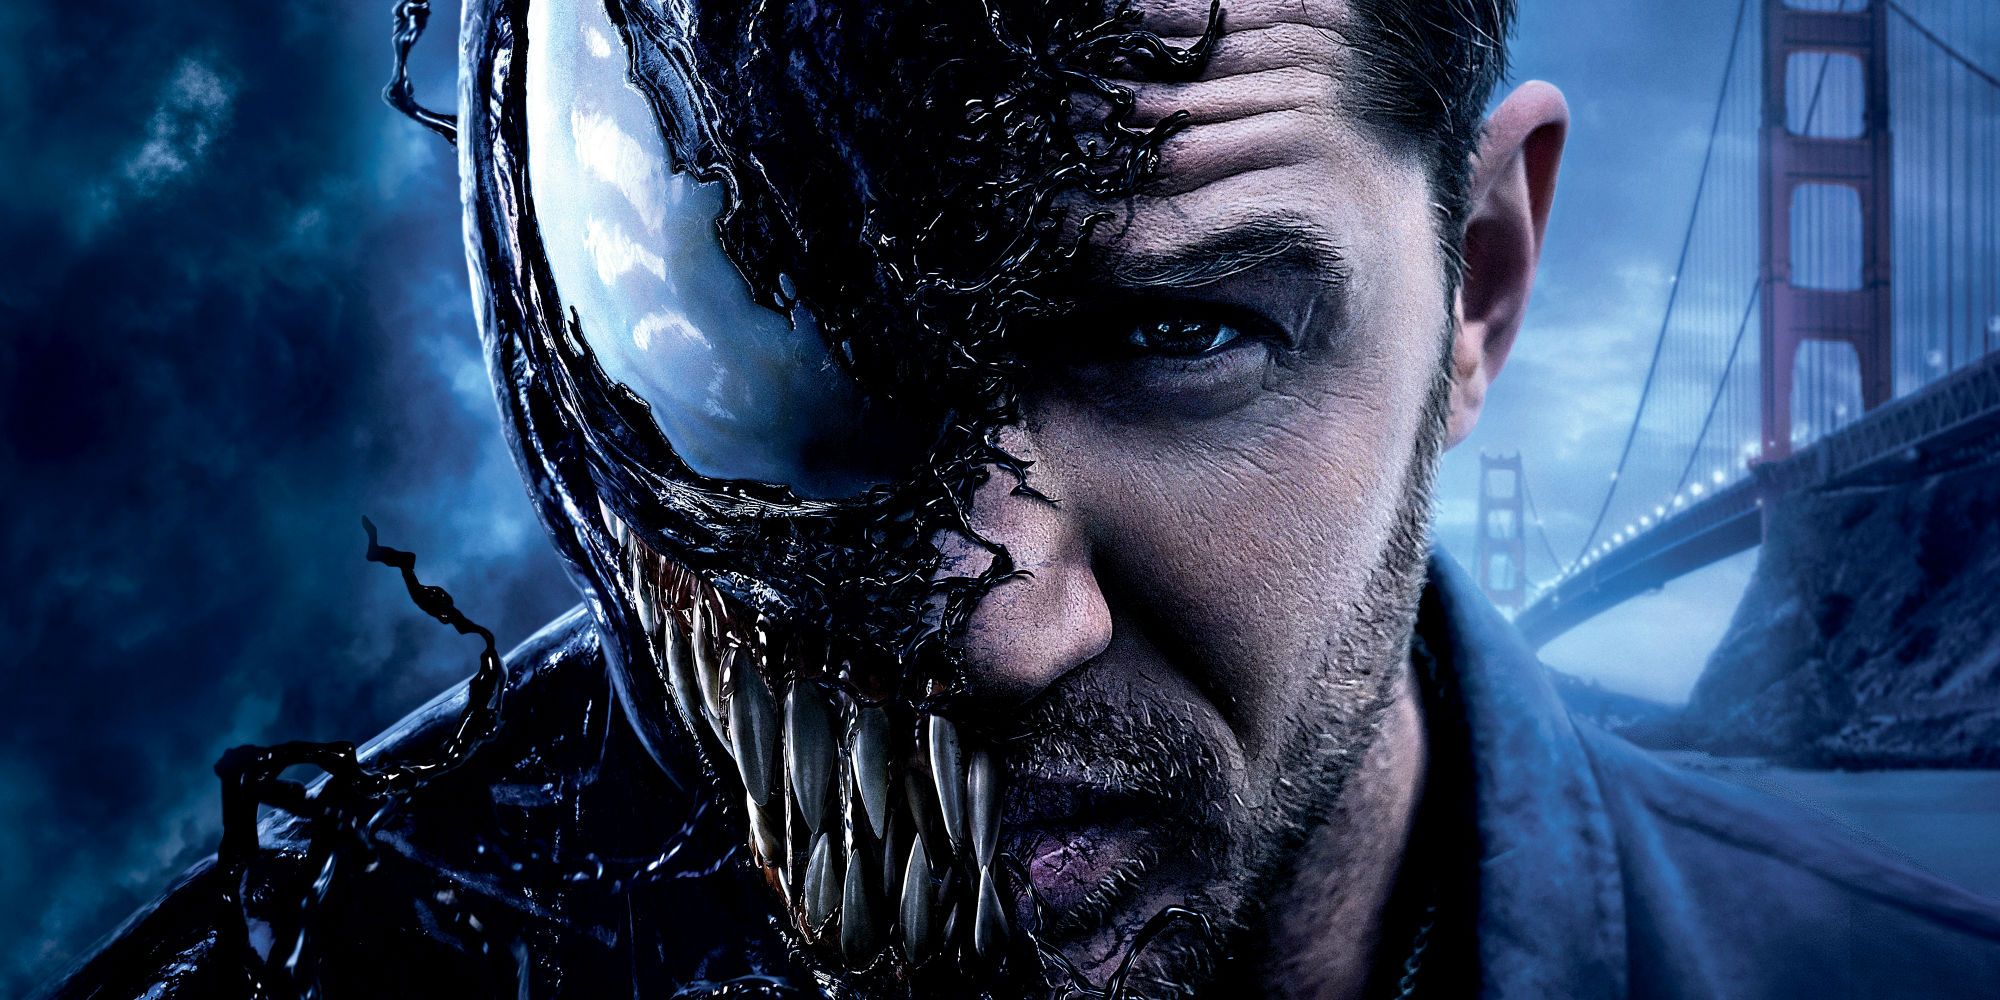 Todd McFarlane Thinks Critics Were Too Old to Appreciate Venom